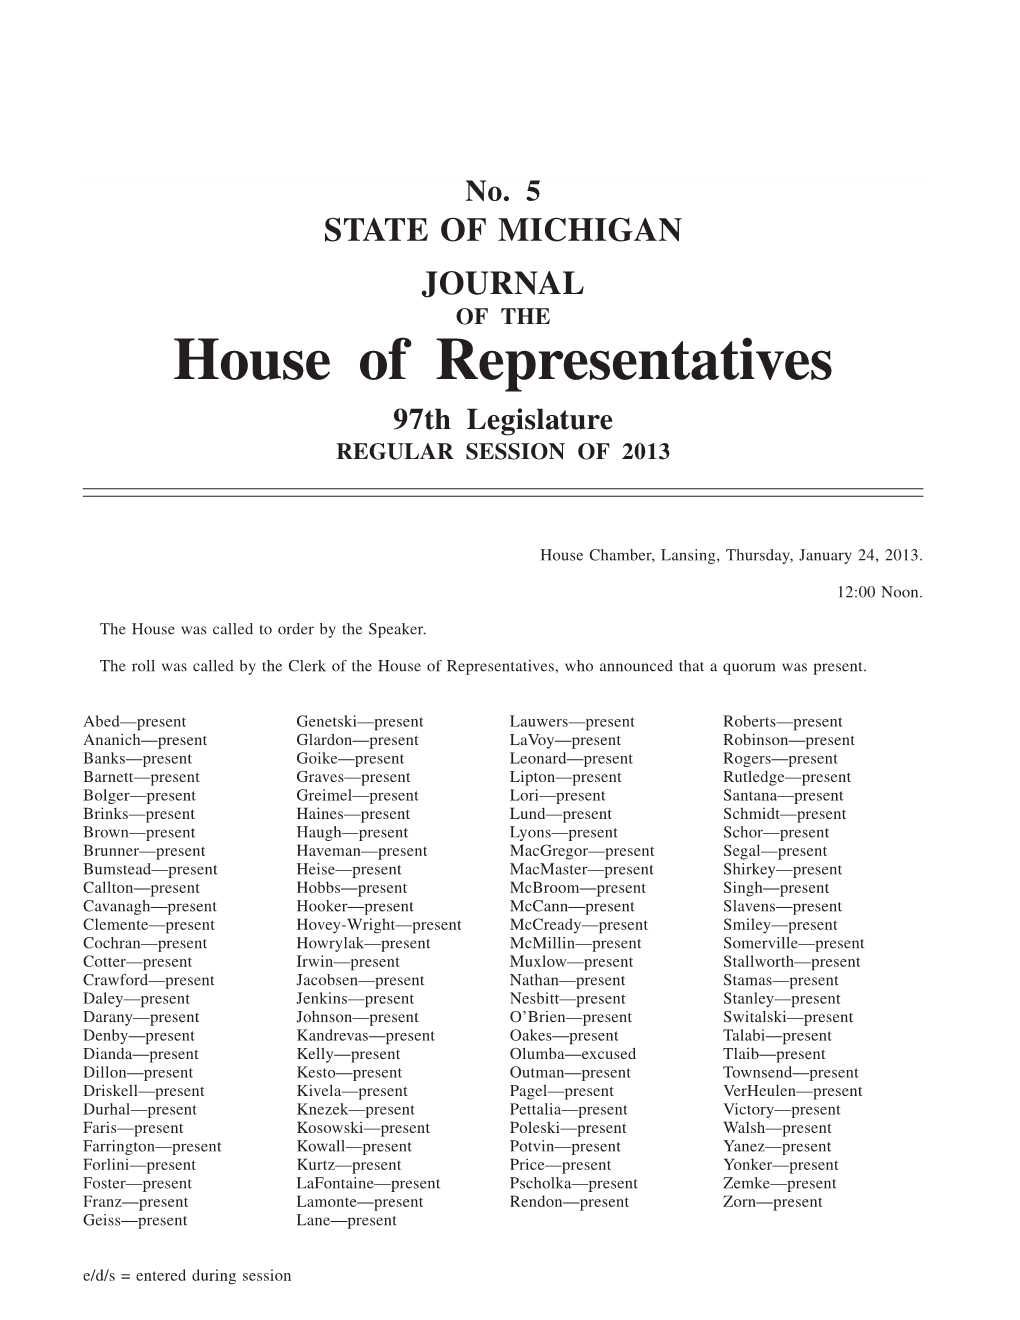 JOURNAL of the House of Representatives 97Th Legislature REGULAR SESSION of 2013